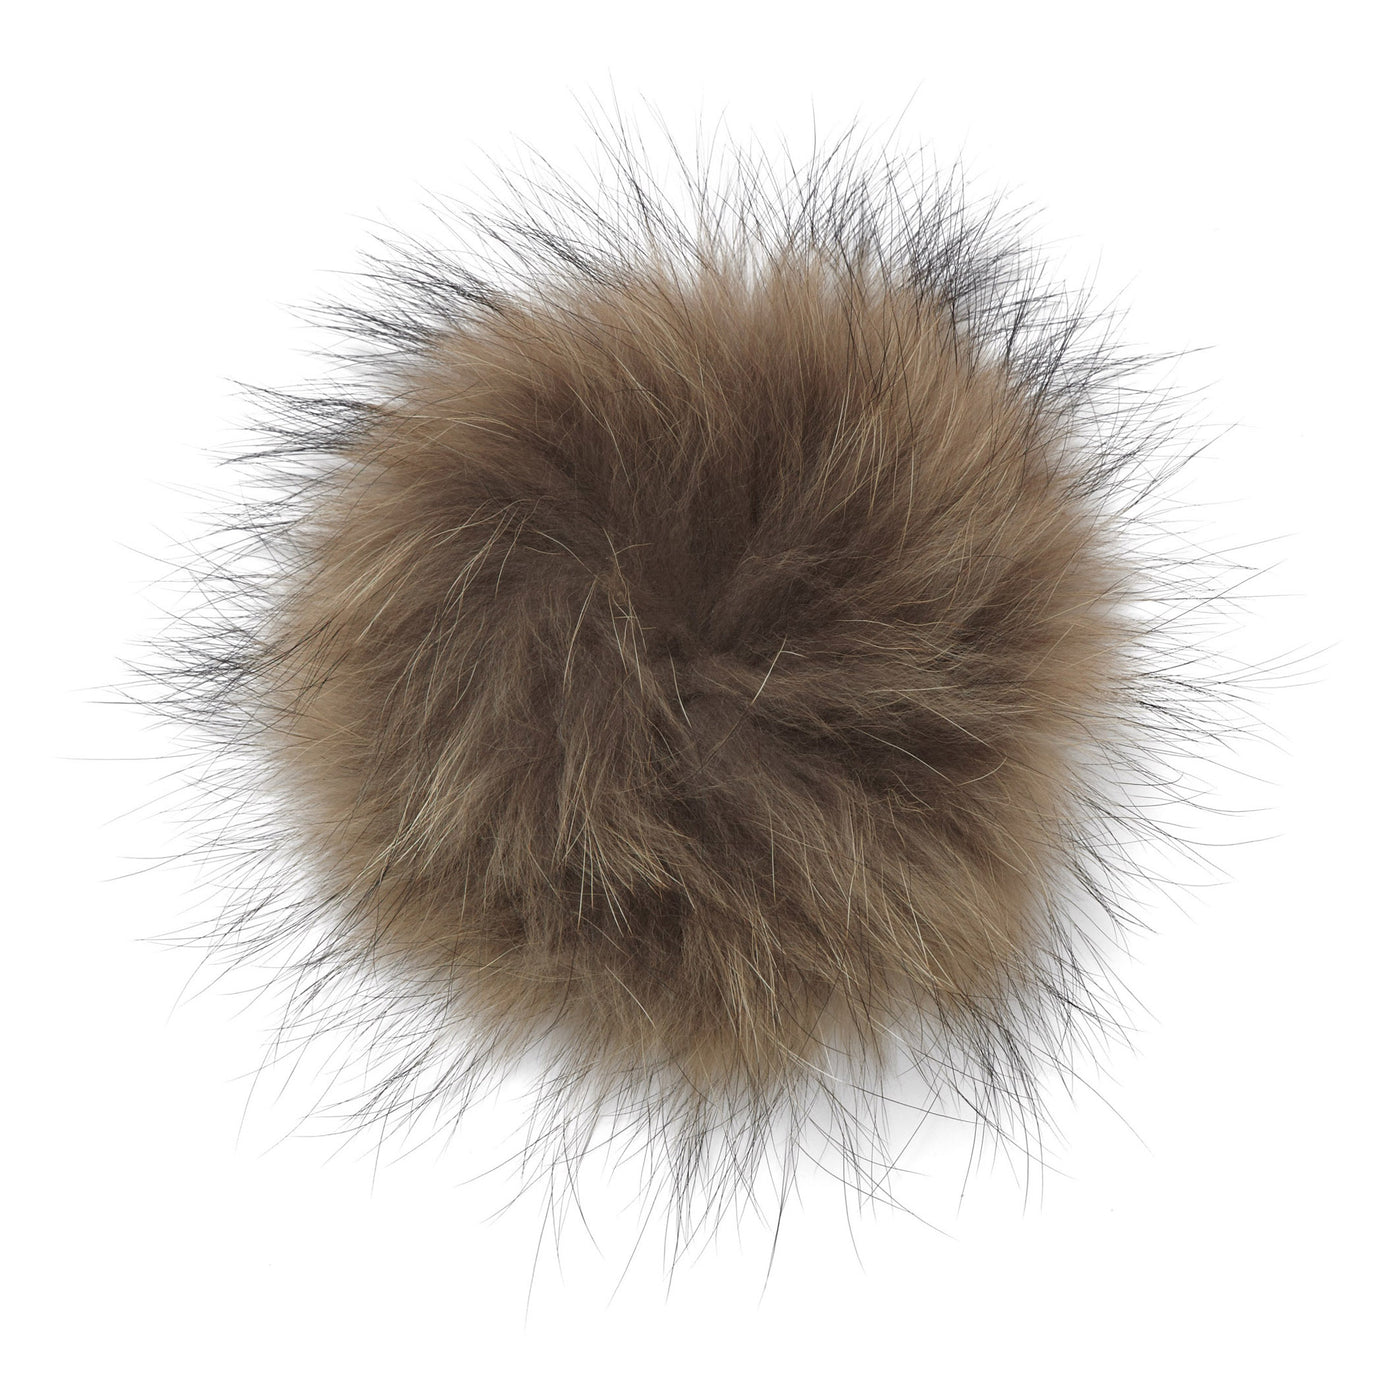 Snowlux Real Fur Bobble